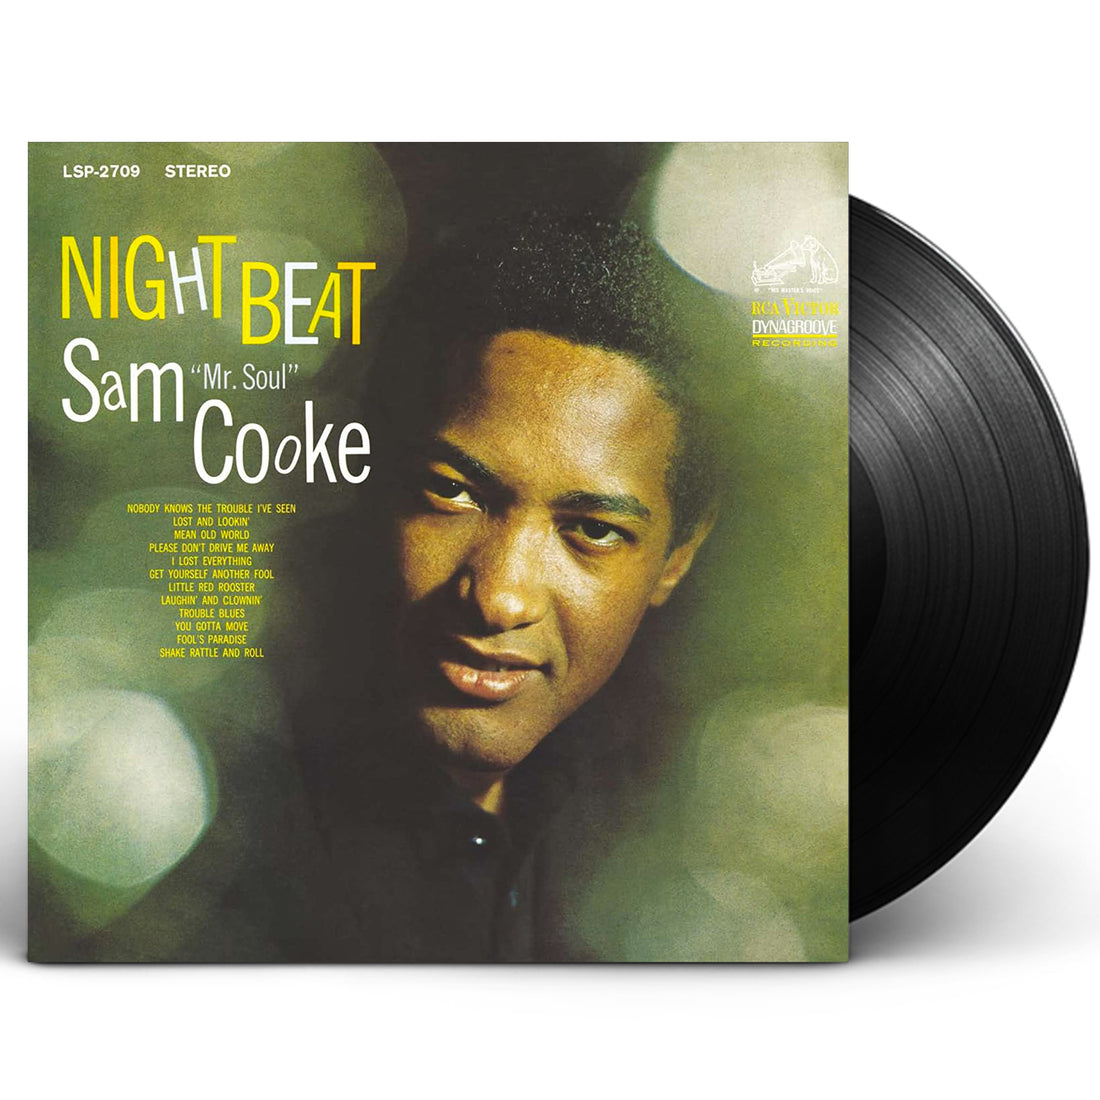 Sam Cooke "Night Beat" LP 180 Gram Vinyl